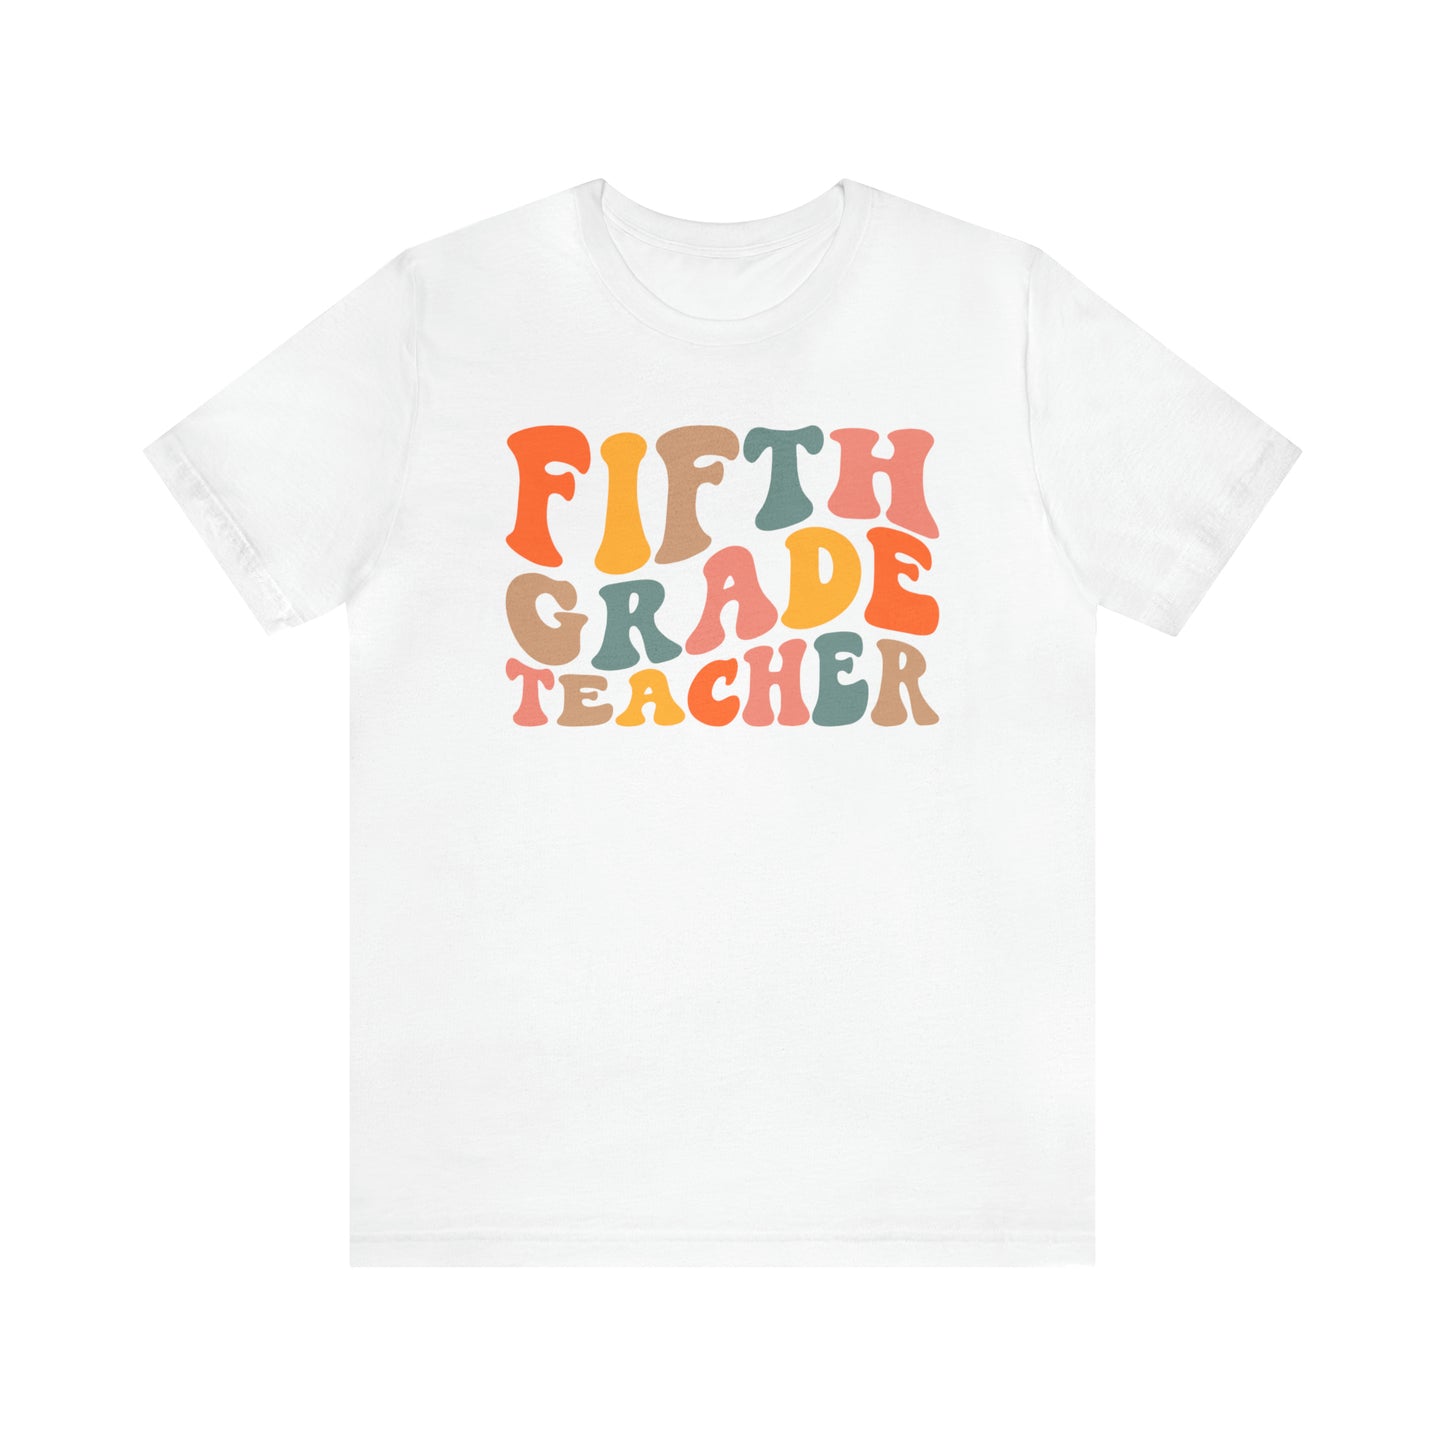 Colorful Groovy Retro "Fifth Grade Teacher" tee